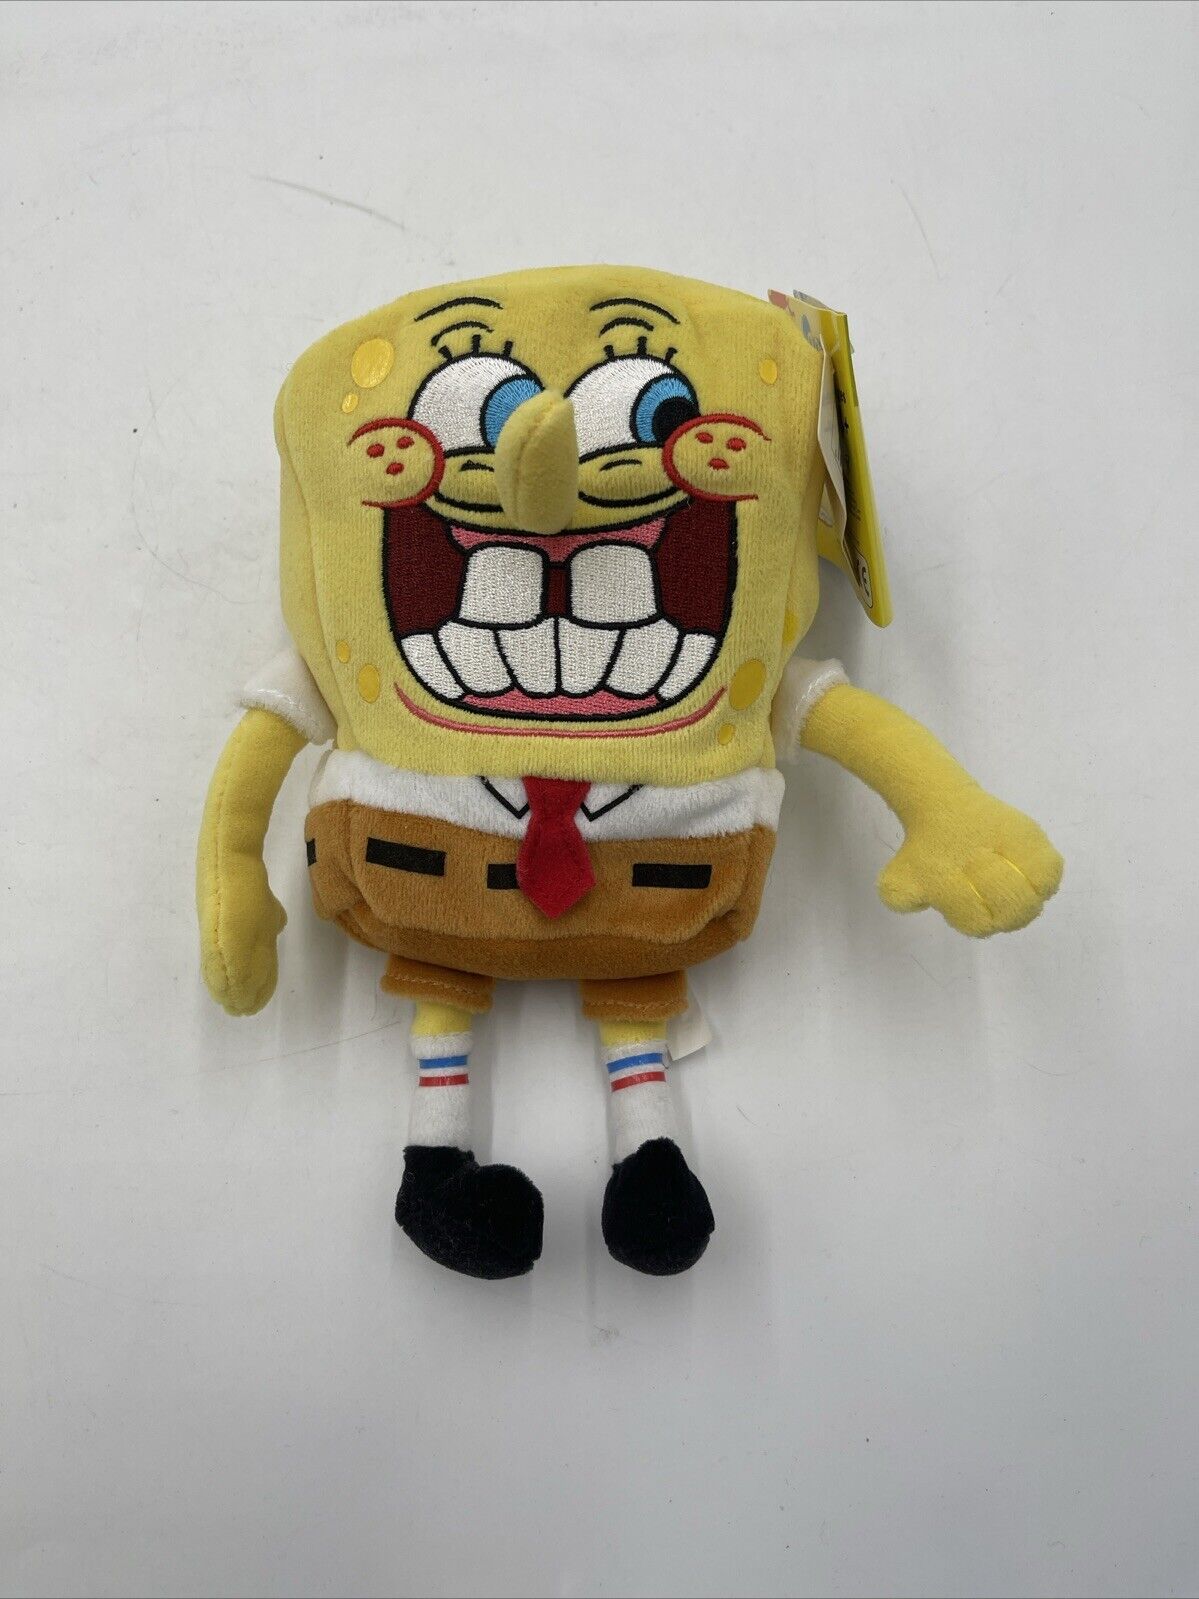 Nickelodeon 2009 SpongeBob SquarePants Big Smile Toy Stuffed Plush New NWT